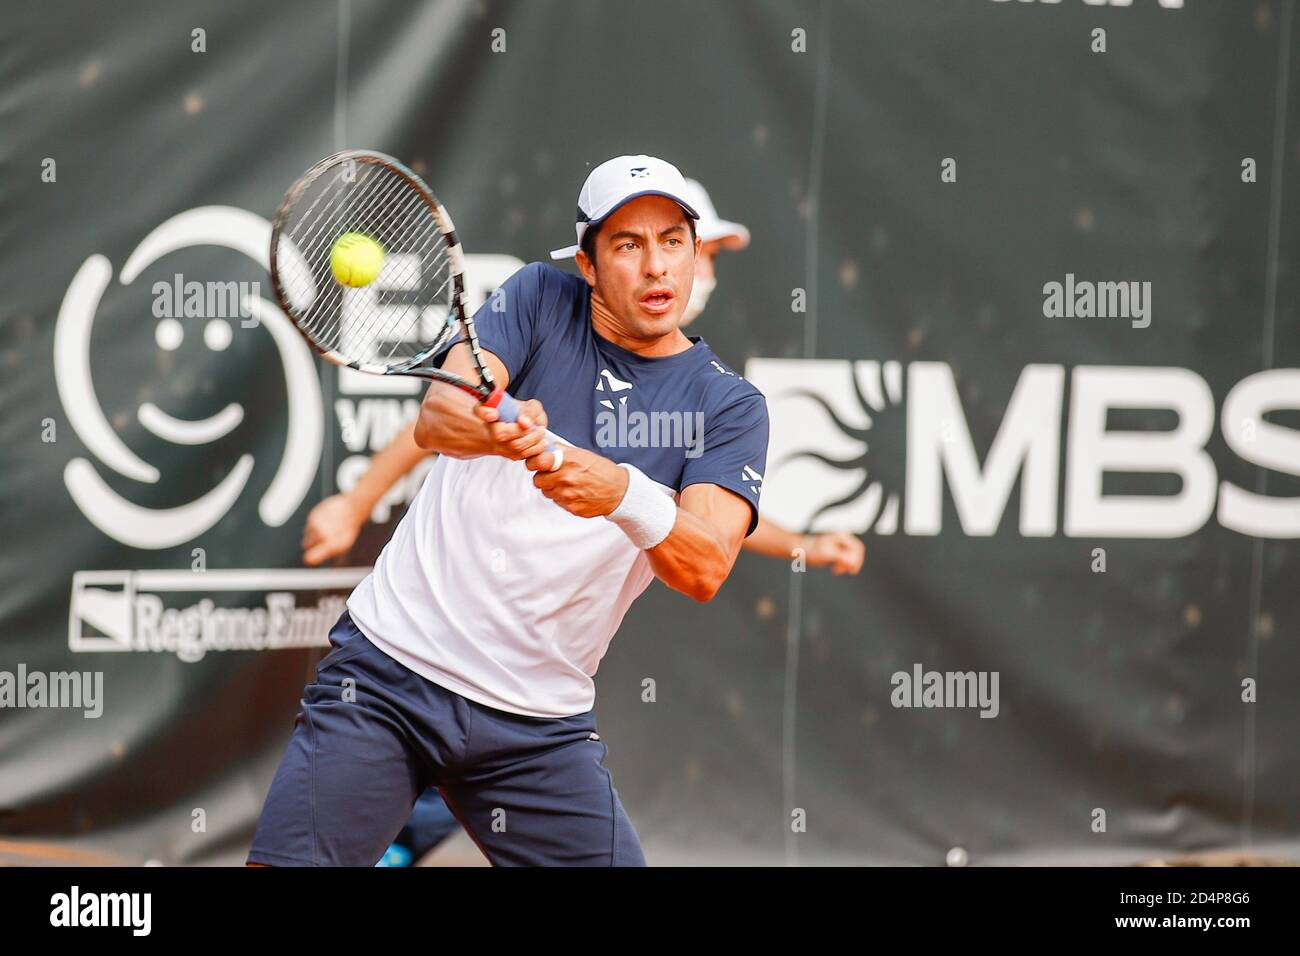 Onzalo Escobar durante l'ATP Challenger 125 - internazionali Emilia Romagna, Tennis Internationals, parma, Italy, 09 Oct 2020 Credit: LM/Roberta Corradin Foto Stock